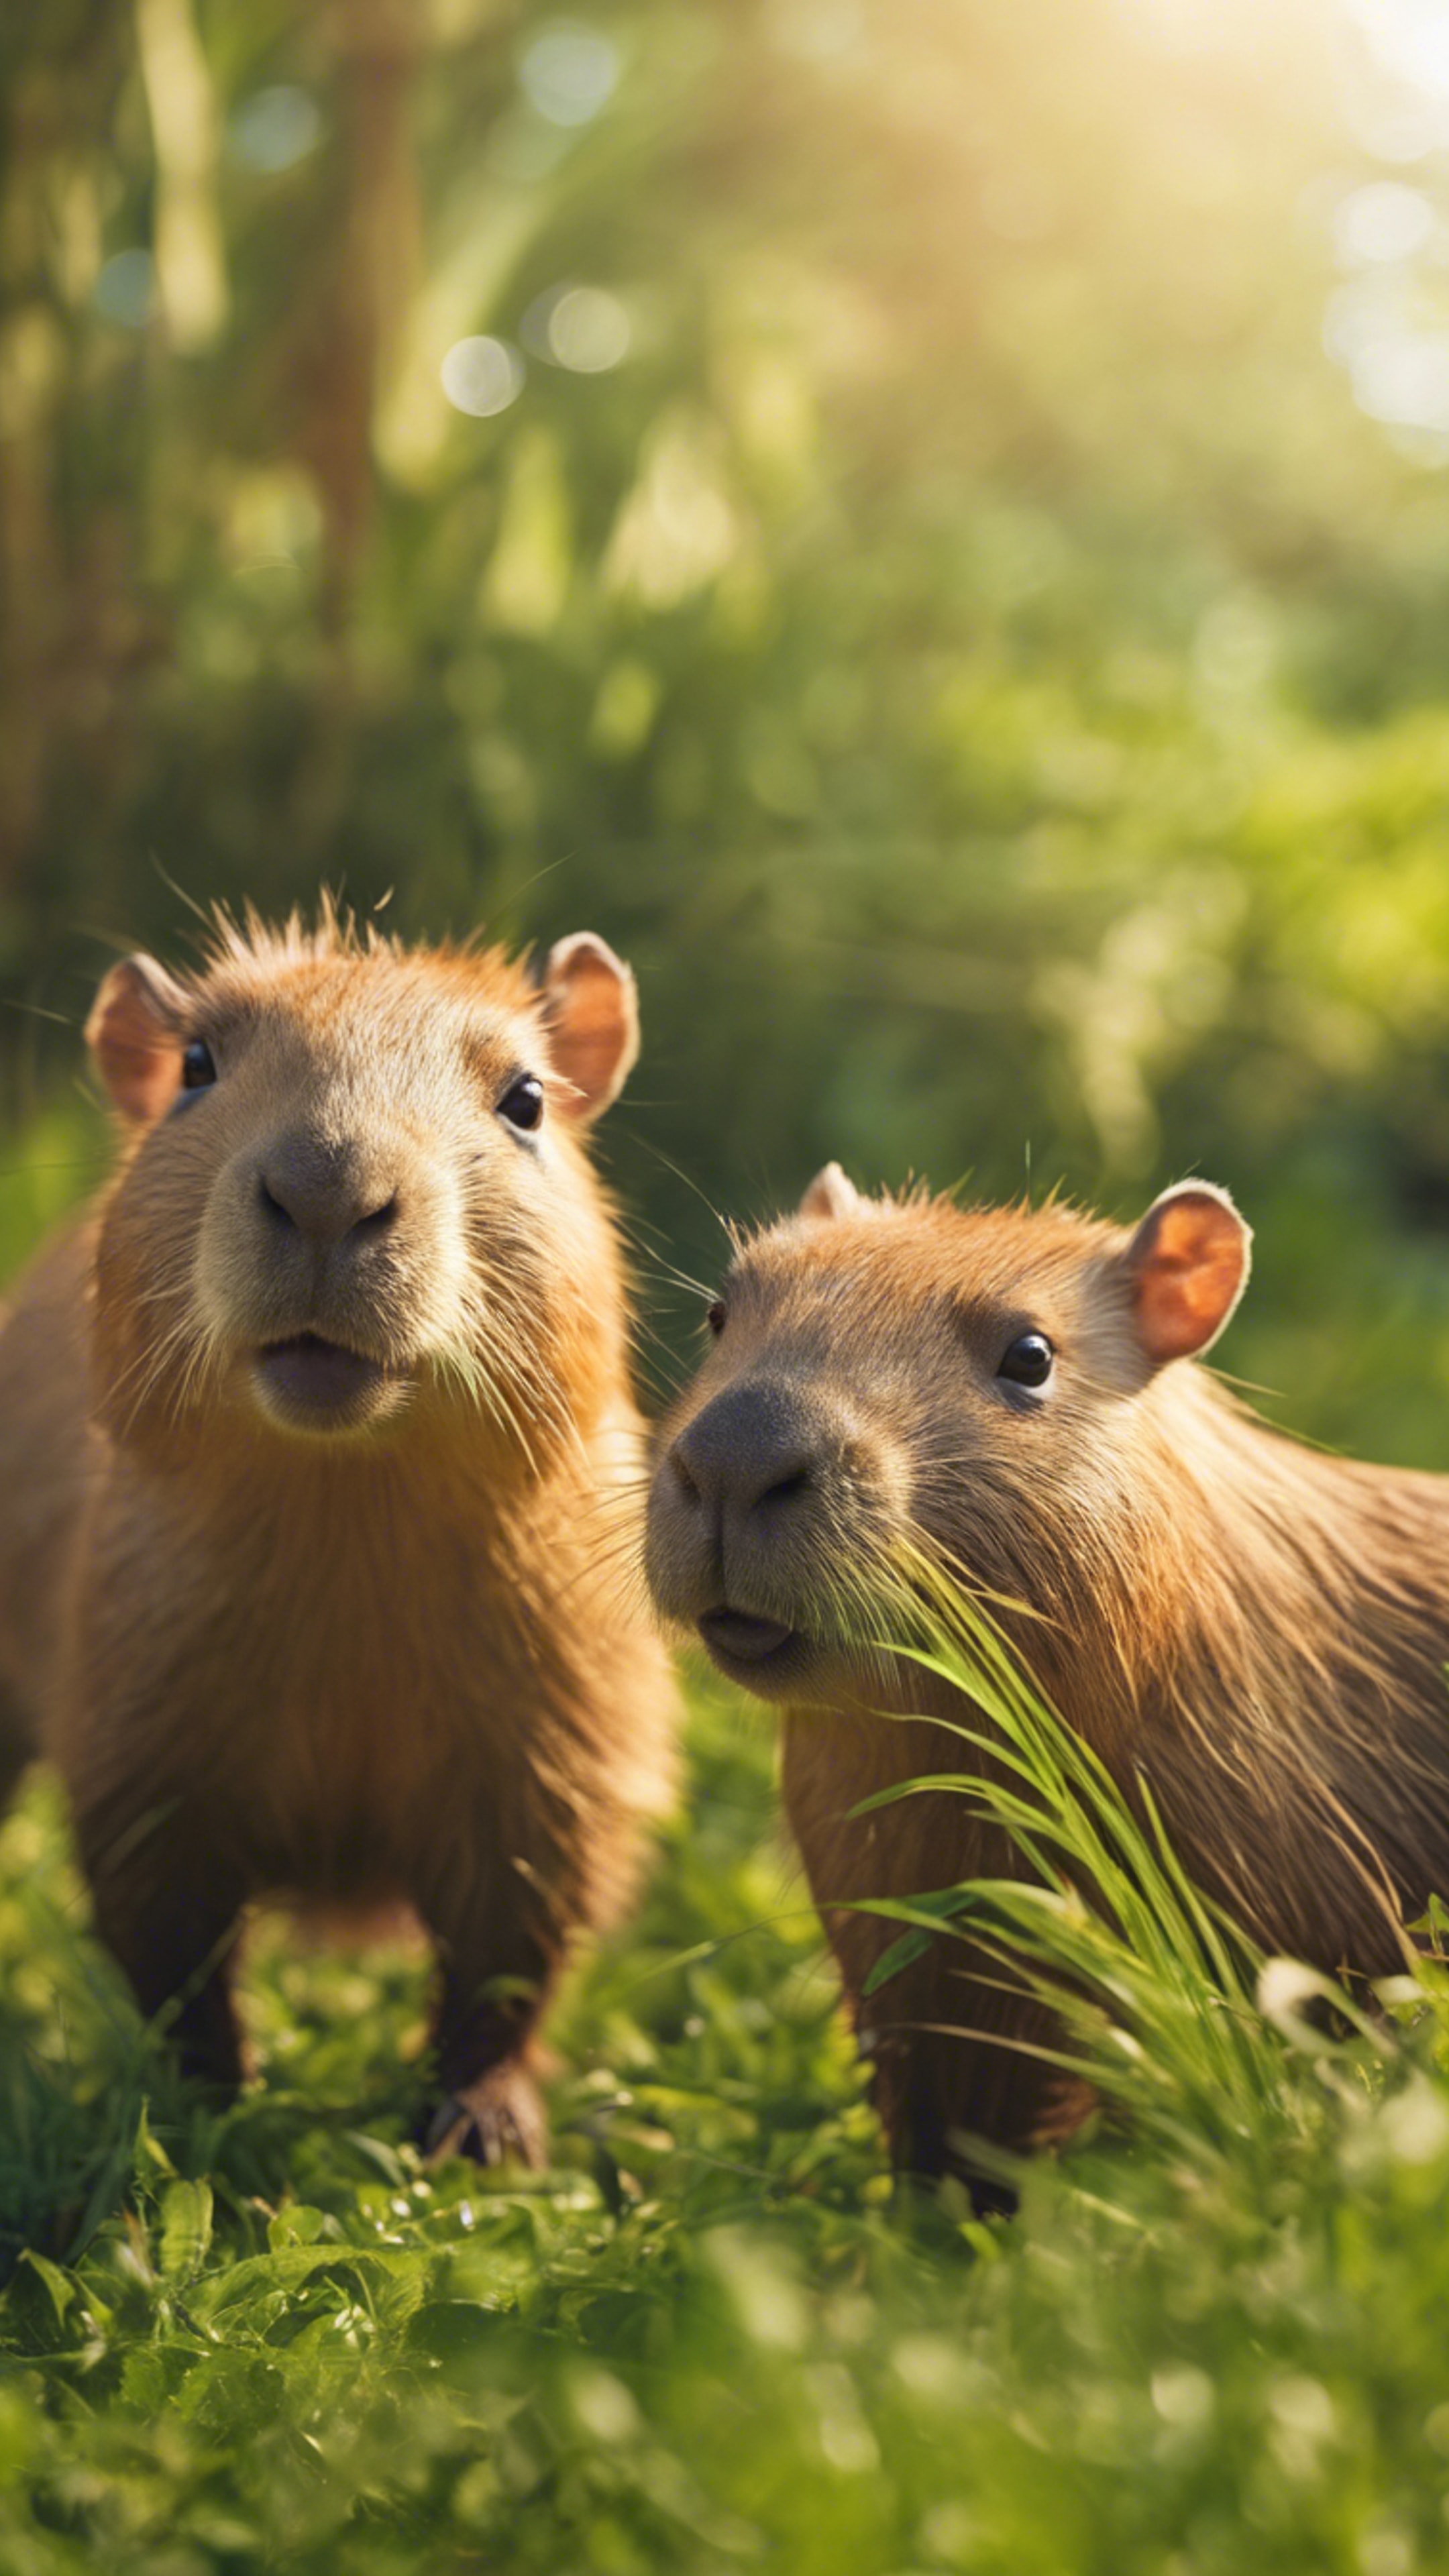 A group of playful capybara kids in a lush green meadow under the warm sunlight. Wallpaper[941f99d4da544970bae4]